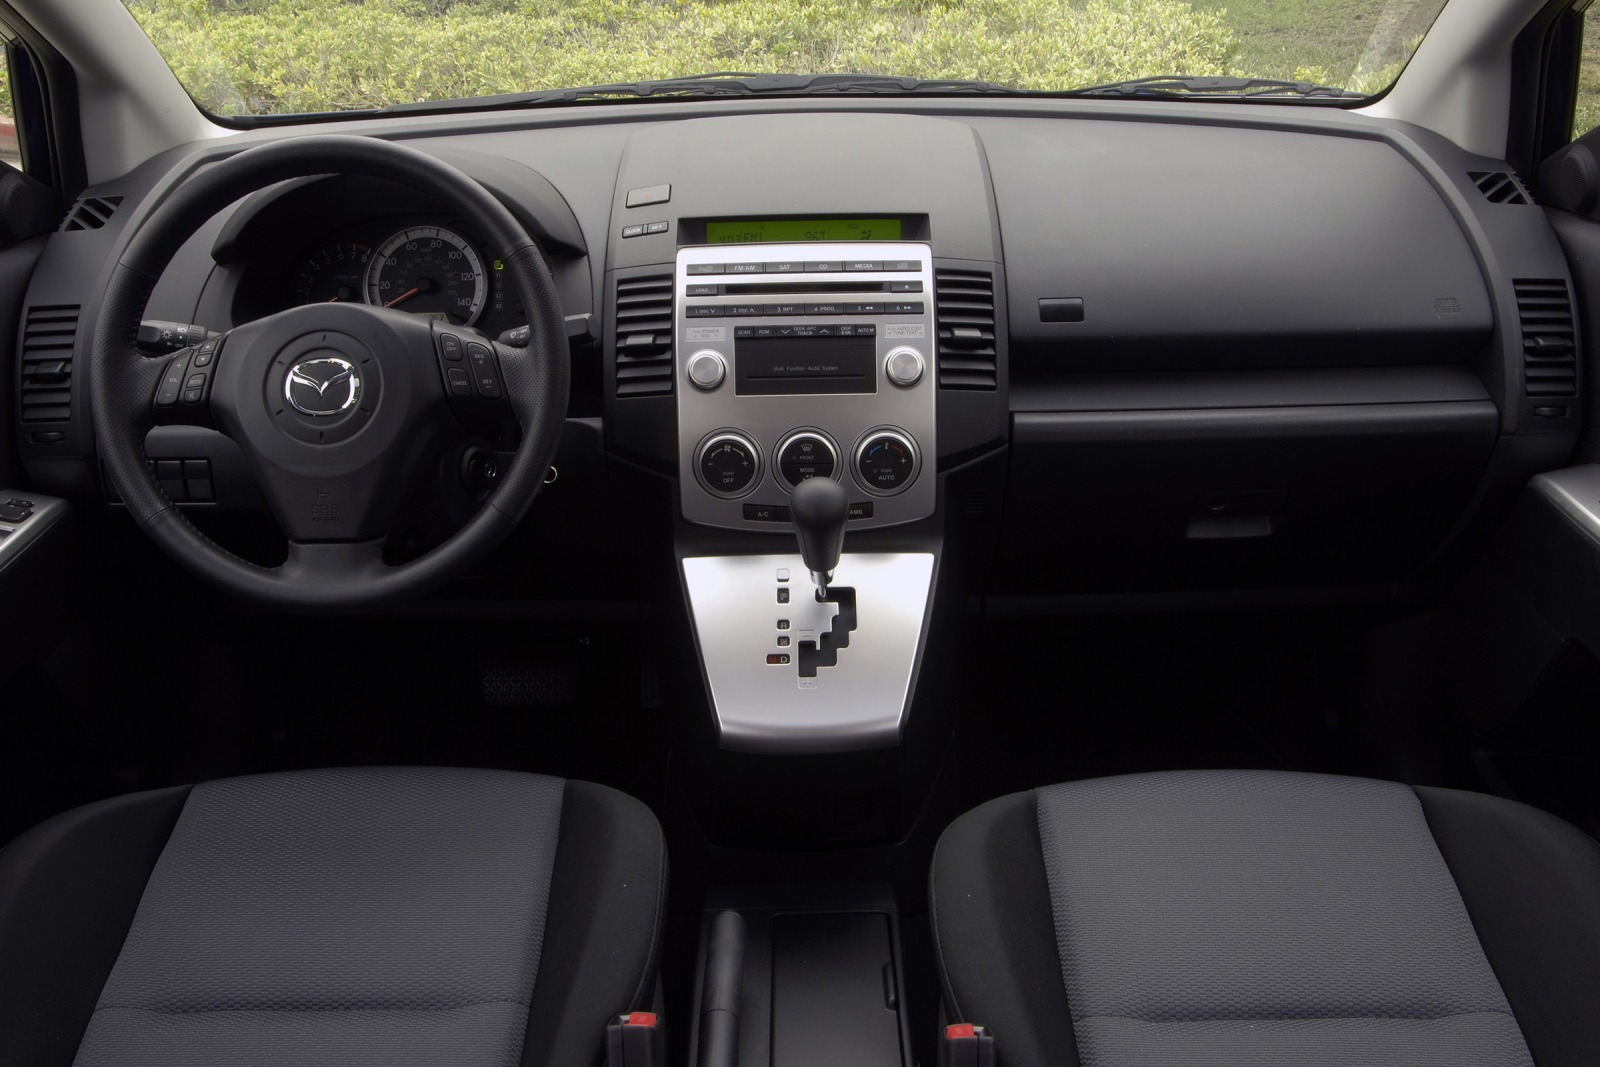 2008 Mazda Mazda5 Touring Passenger Minivan Dashboard